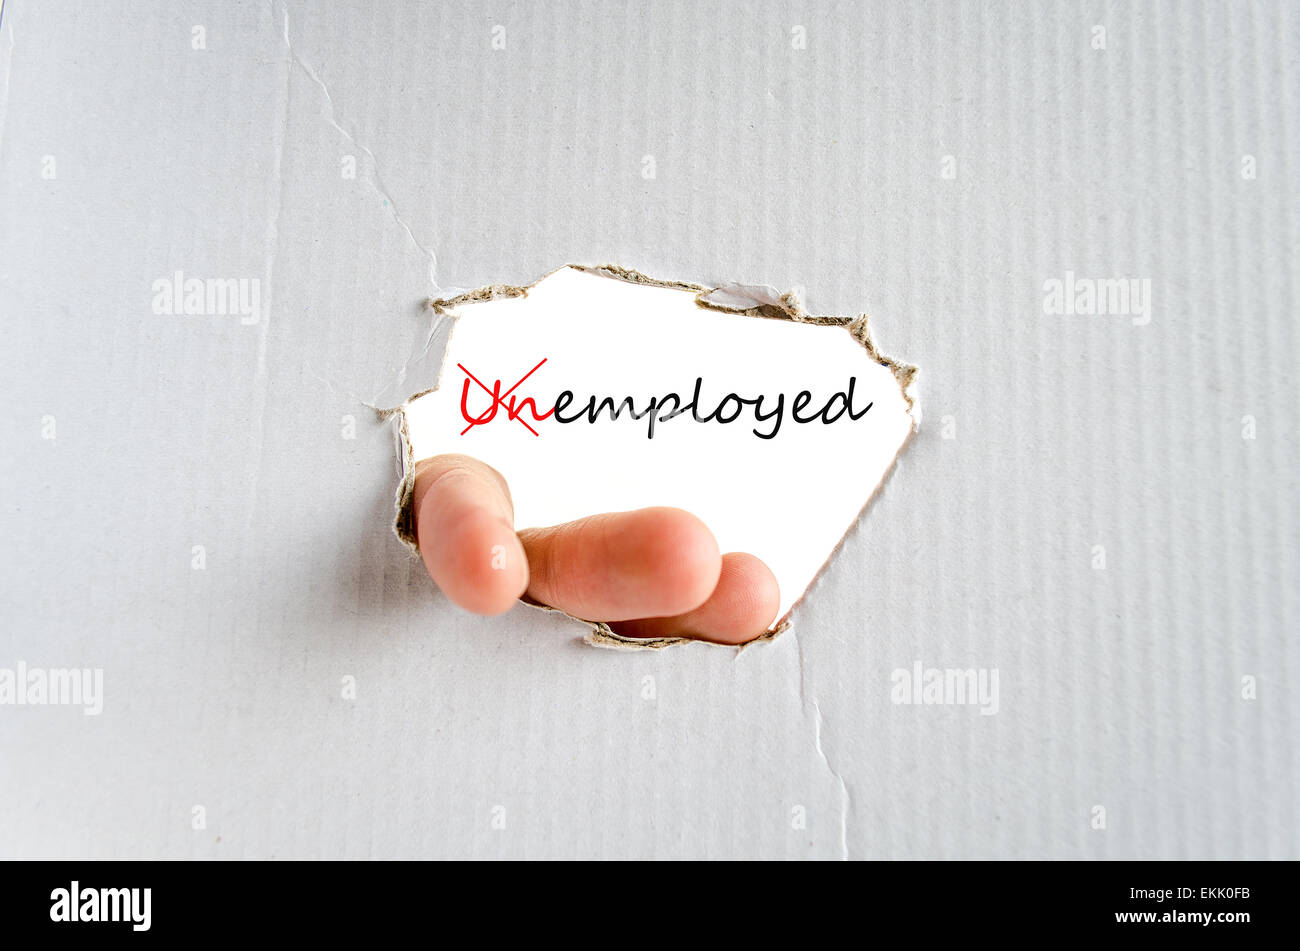 Unemployed Concept Isolated Over White Background Stock Photo